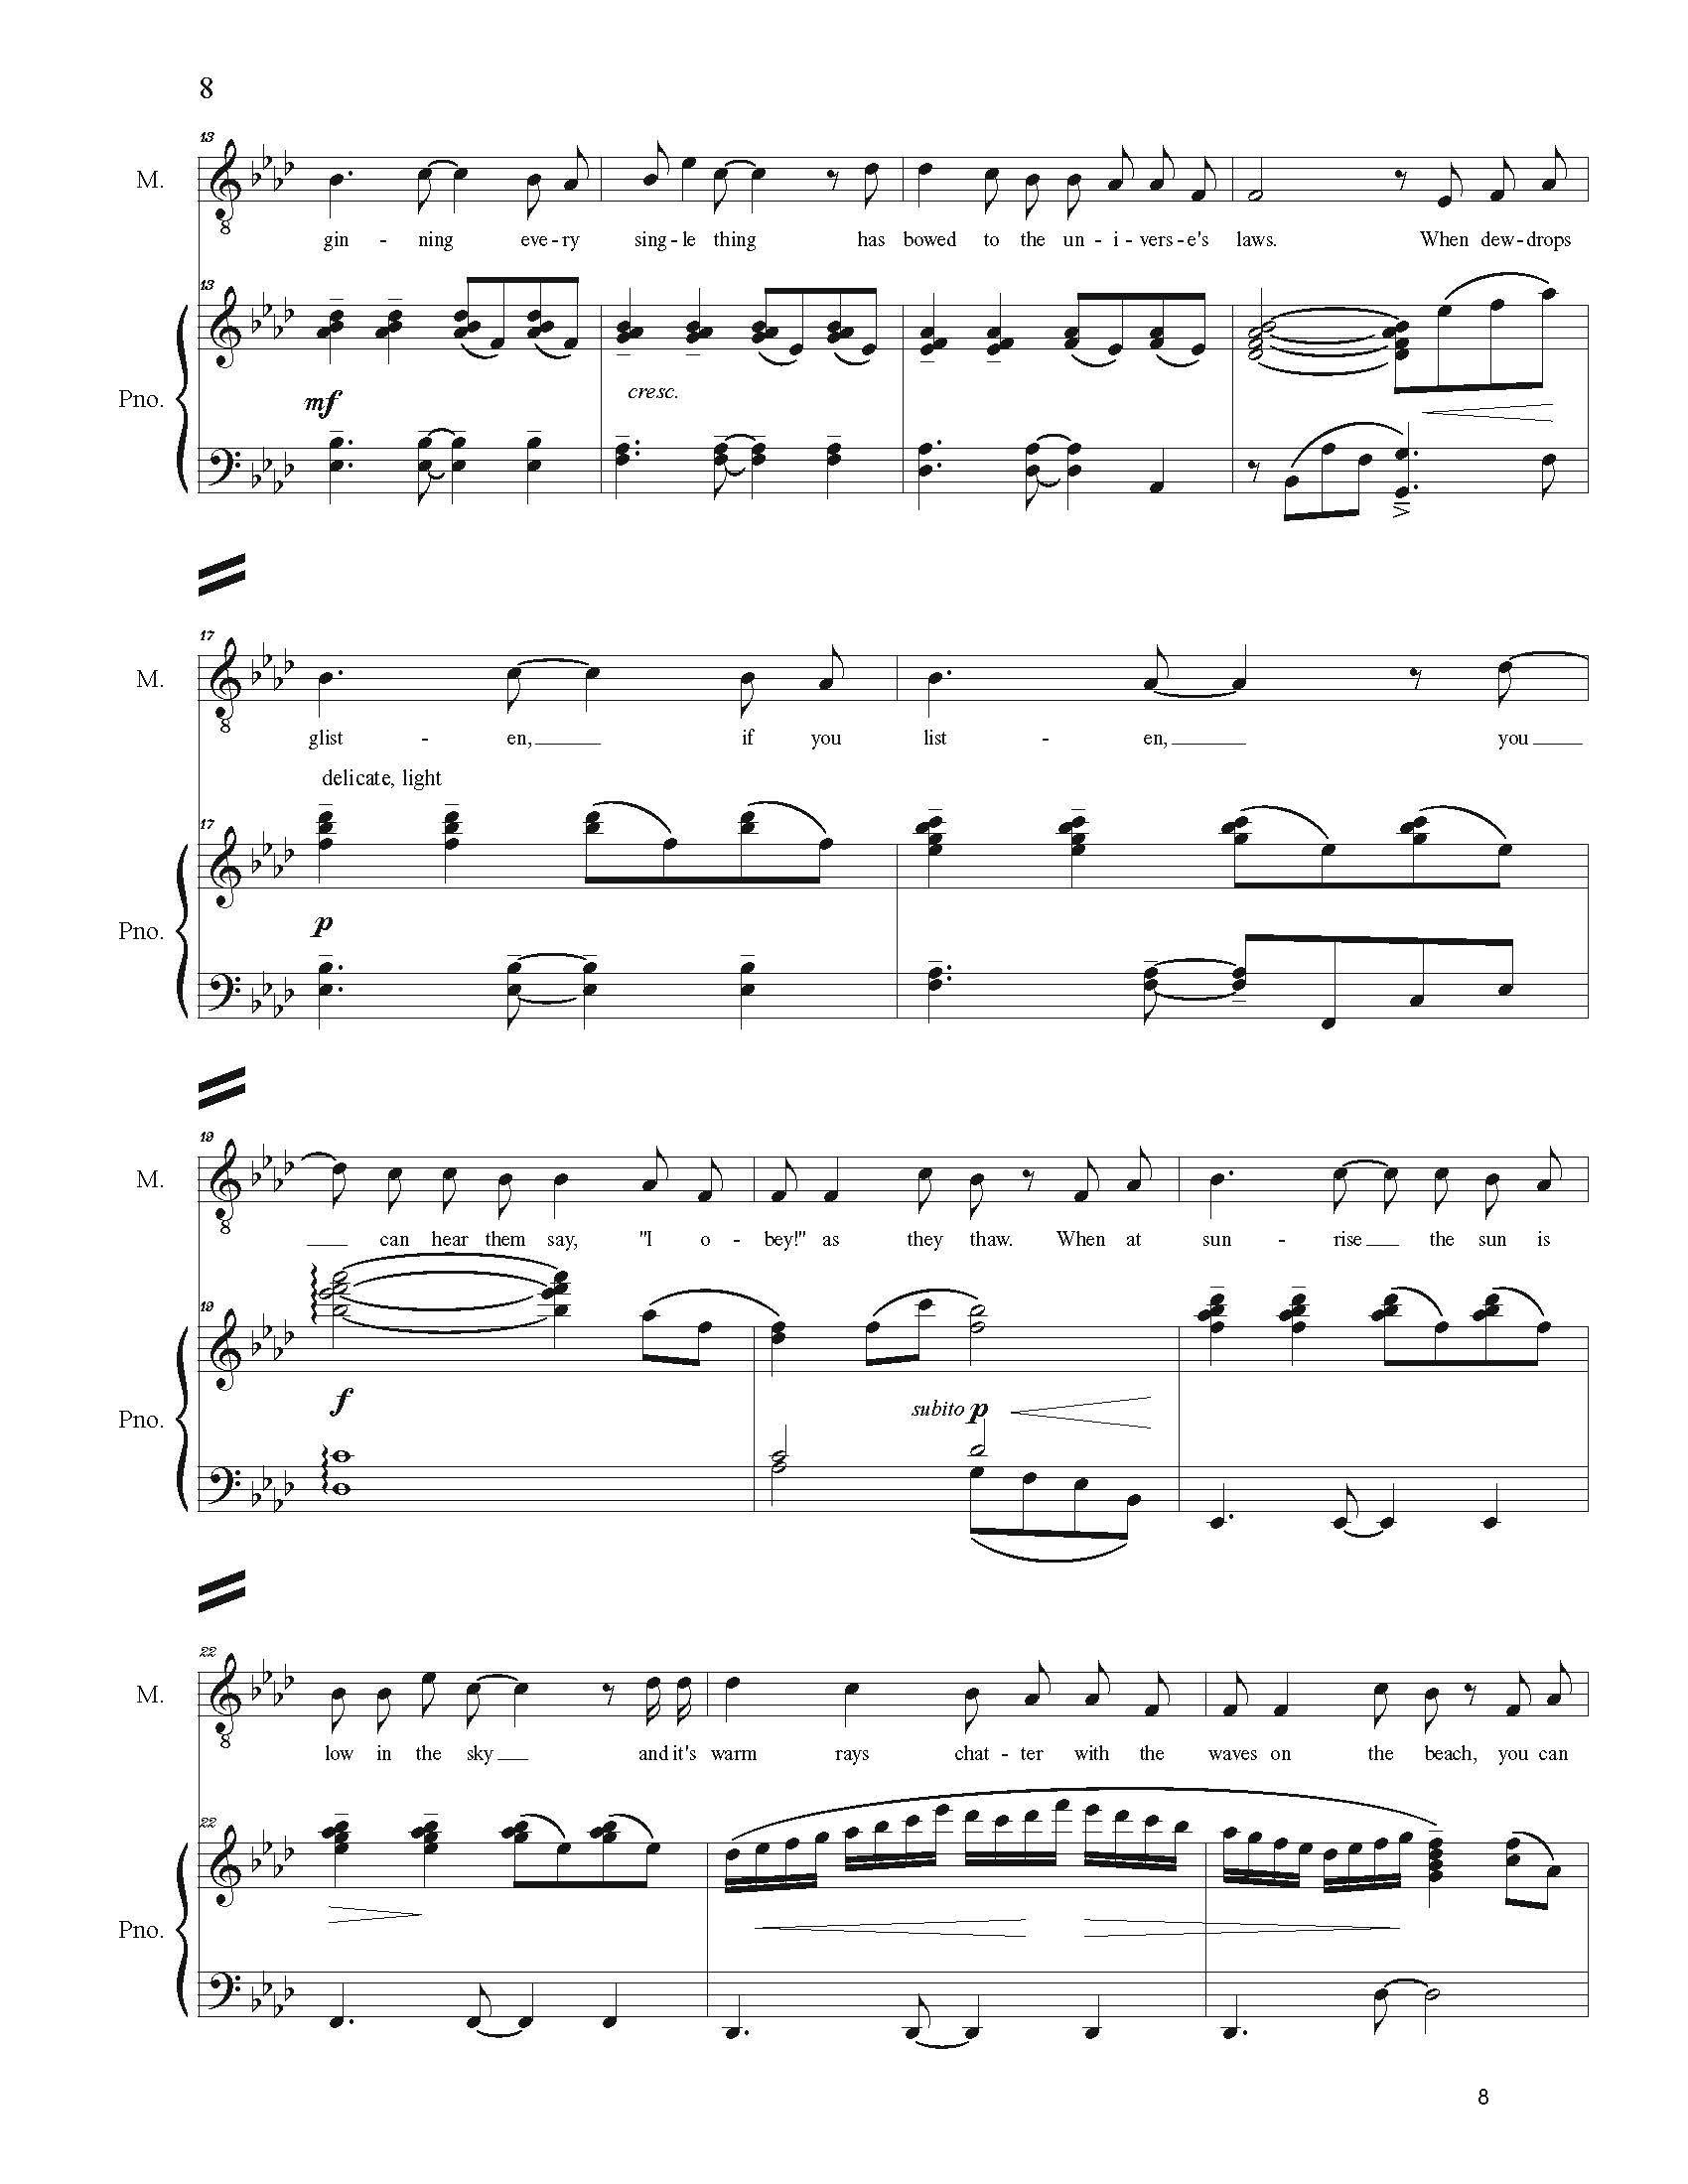 FULL PIANO VOCAL SCORE DRAFT 1 - Score_Page_008.jpg